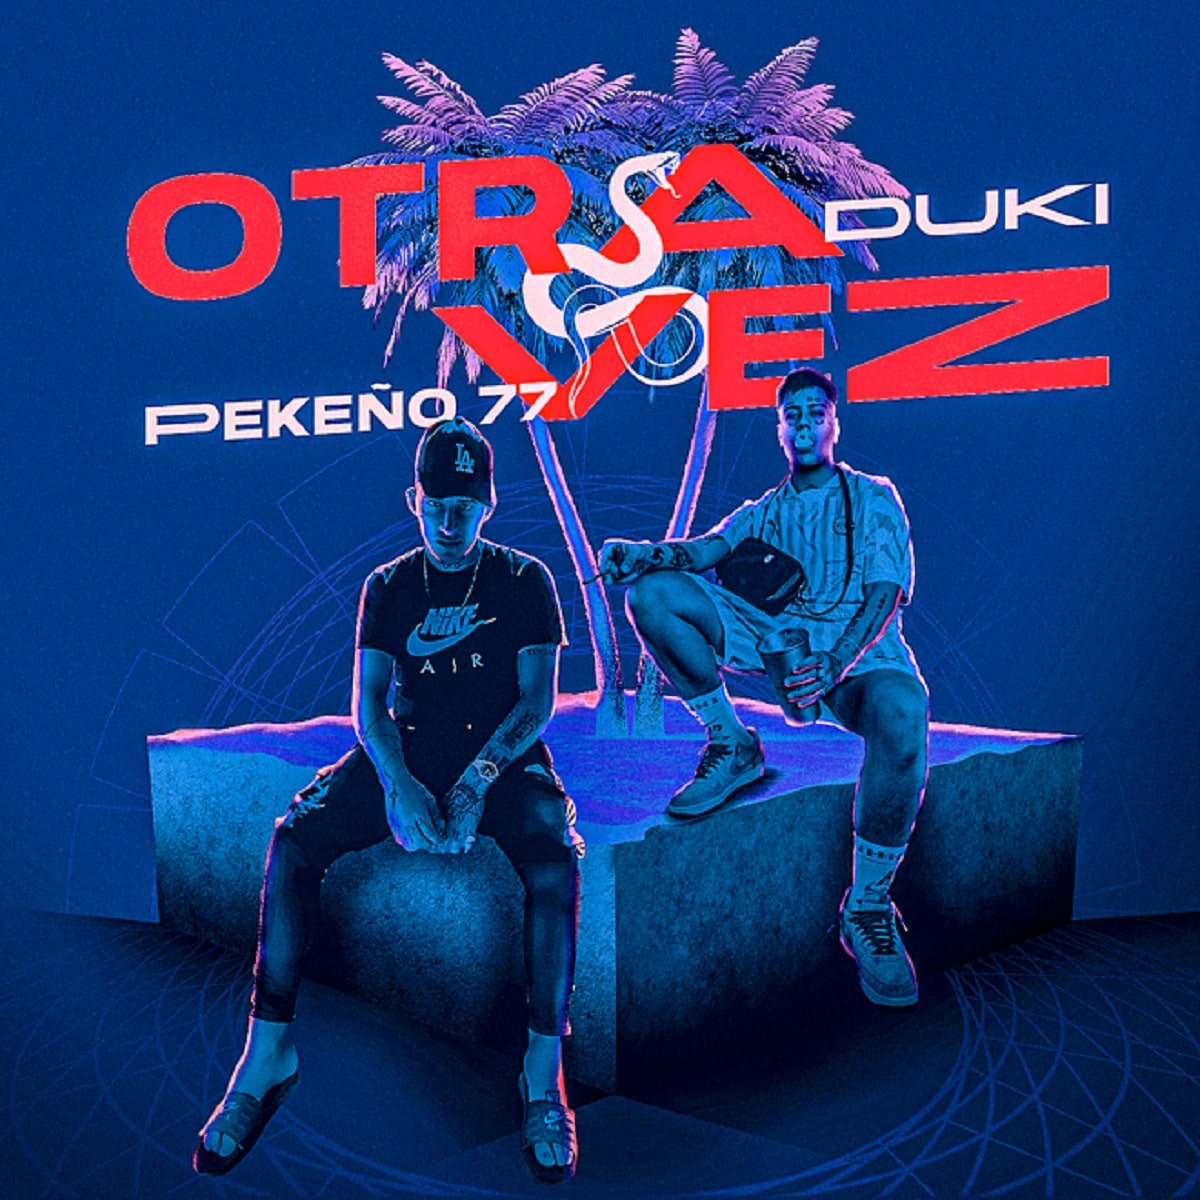 Duki y Pekeño 77 lanzan "Otra vez"